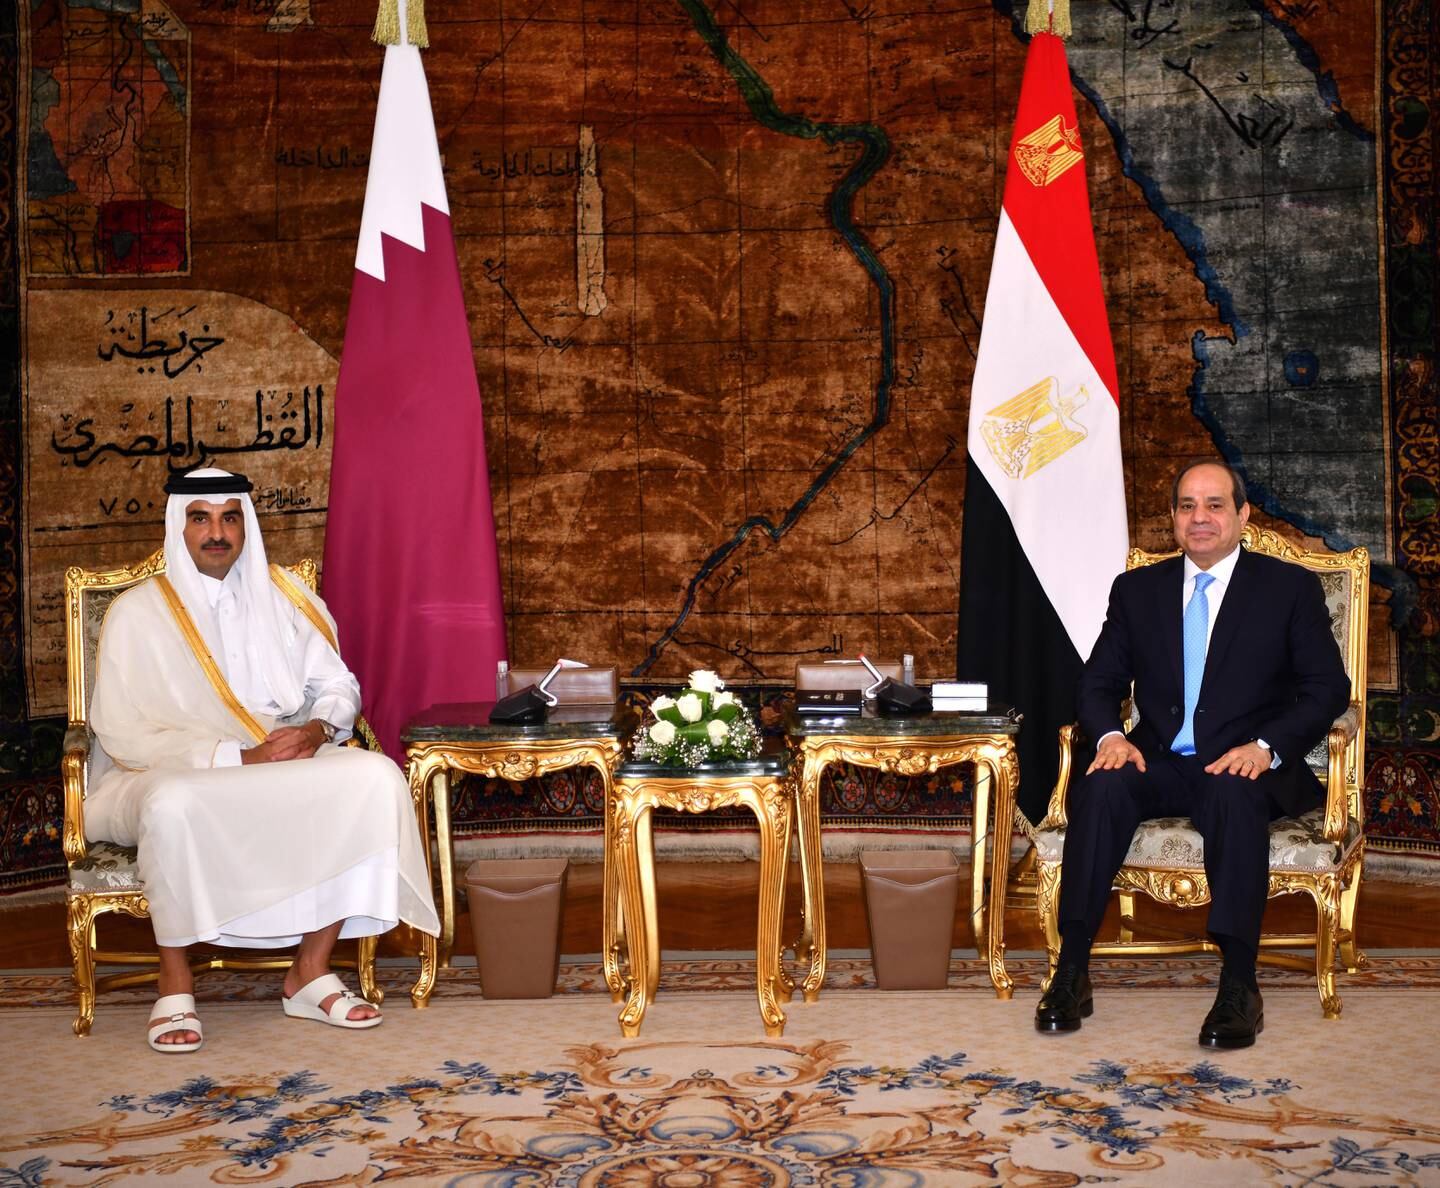 Egyptian President Abdel Fattah El Sisi meets Emir of Qatar Sheikh Tamim at the Presidential Palace in Cairo. EPA